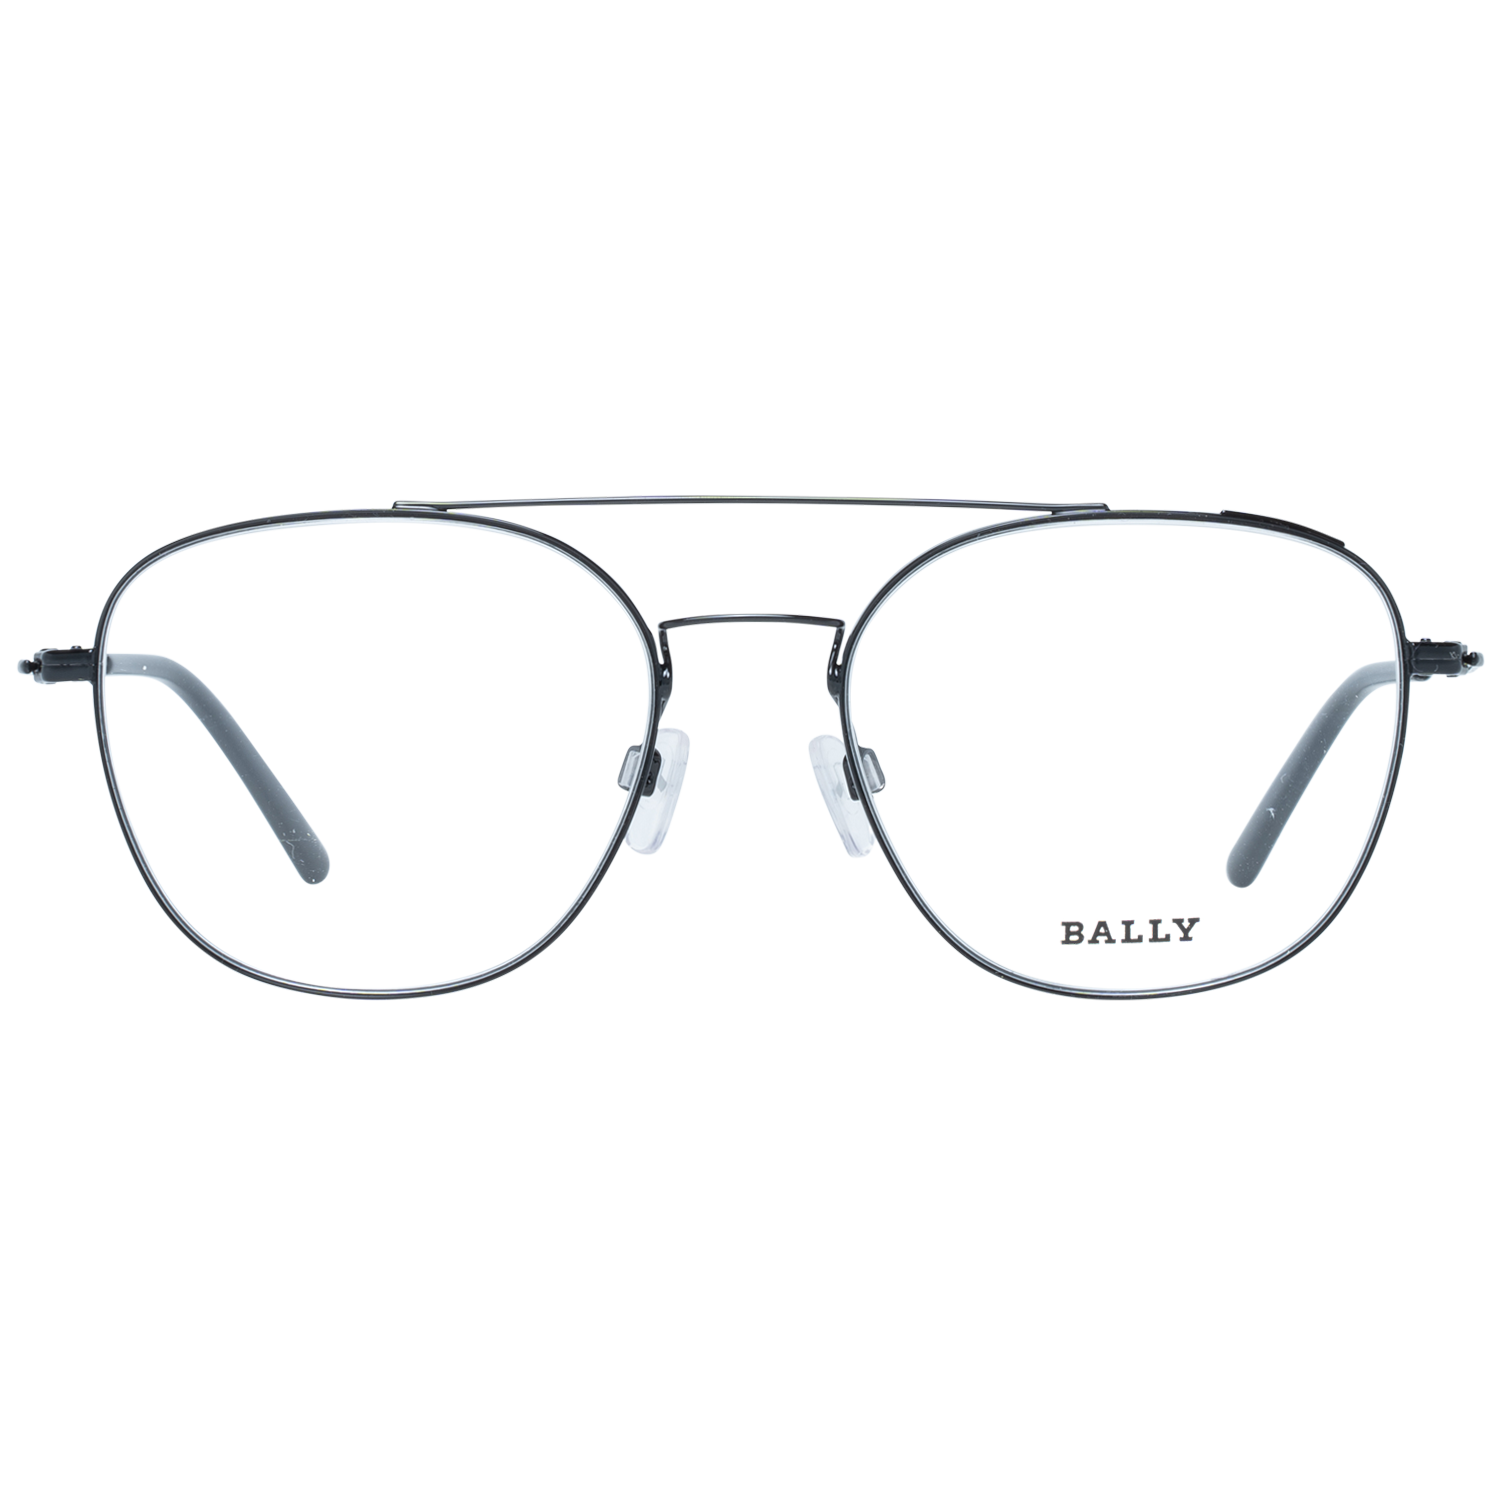 Bally Optical Frame Bally Eyeglasses Frames BY5005-D 001 Men Eyeglasses Eyewear UK USA Australia 